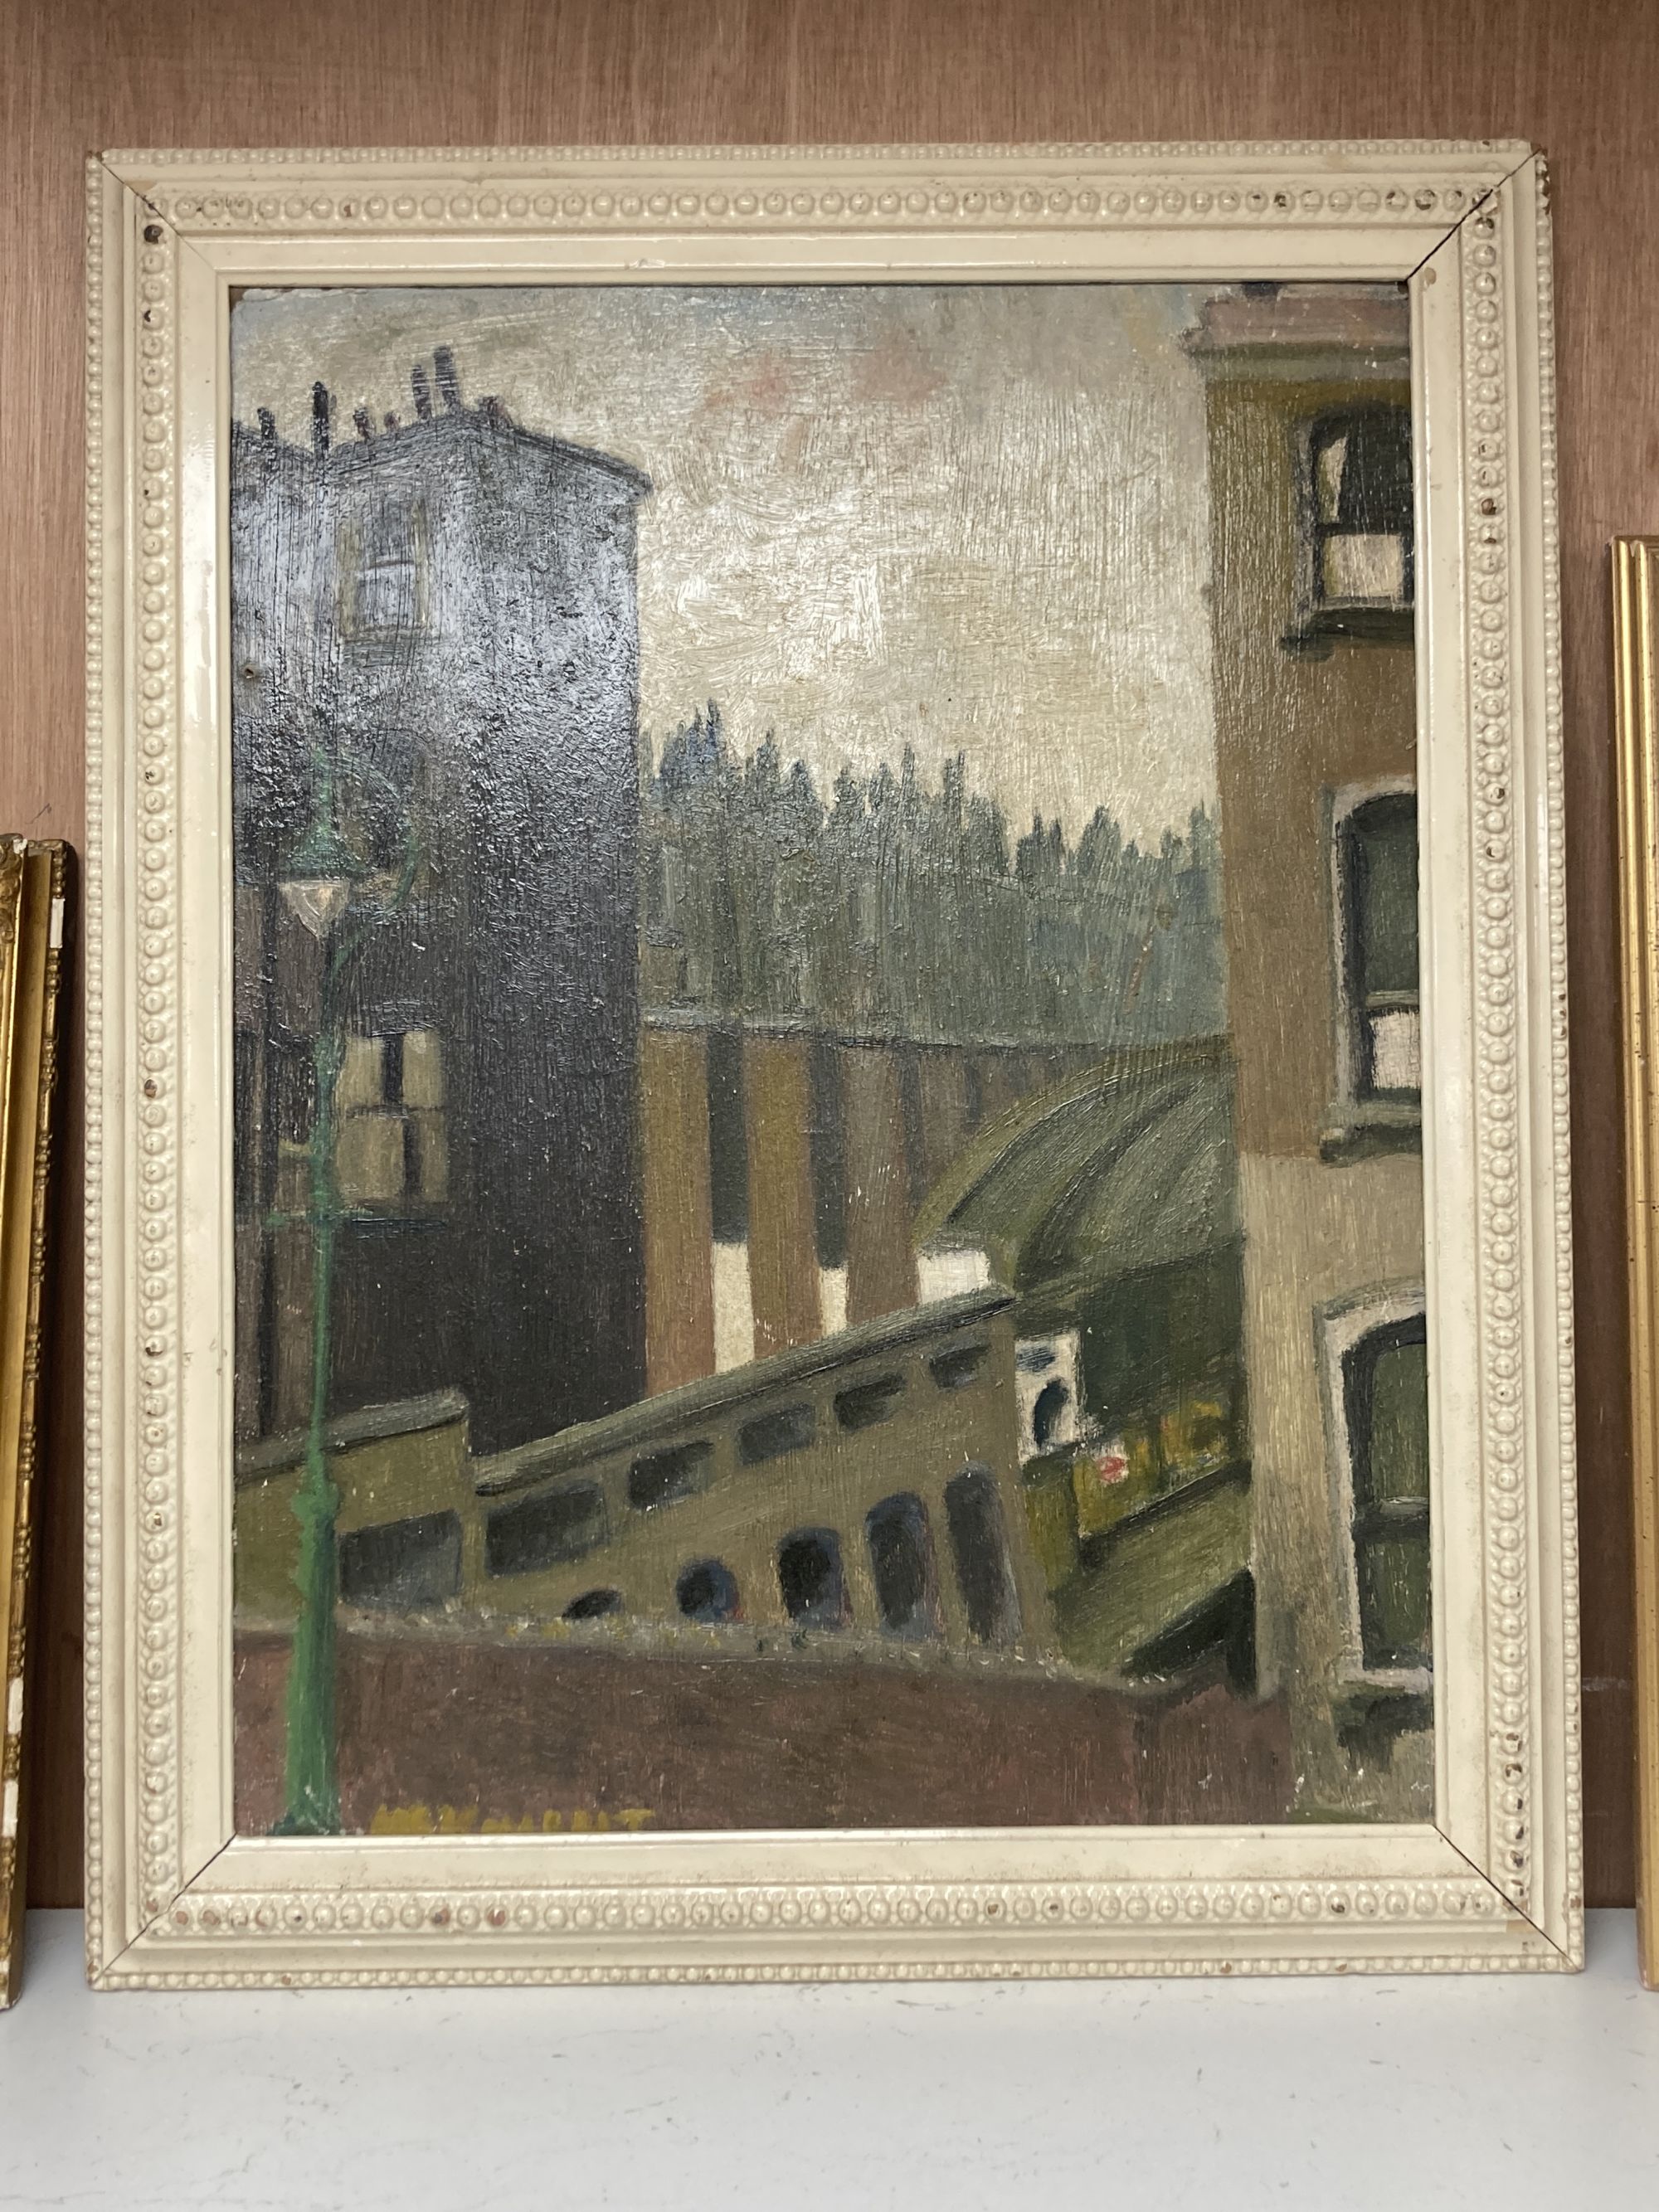 McKnight, oil on board, Street scene, signed, 50 x 38cm, a head study sketch verso